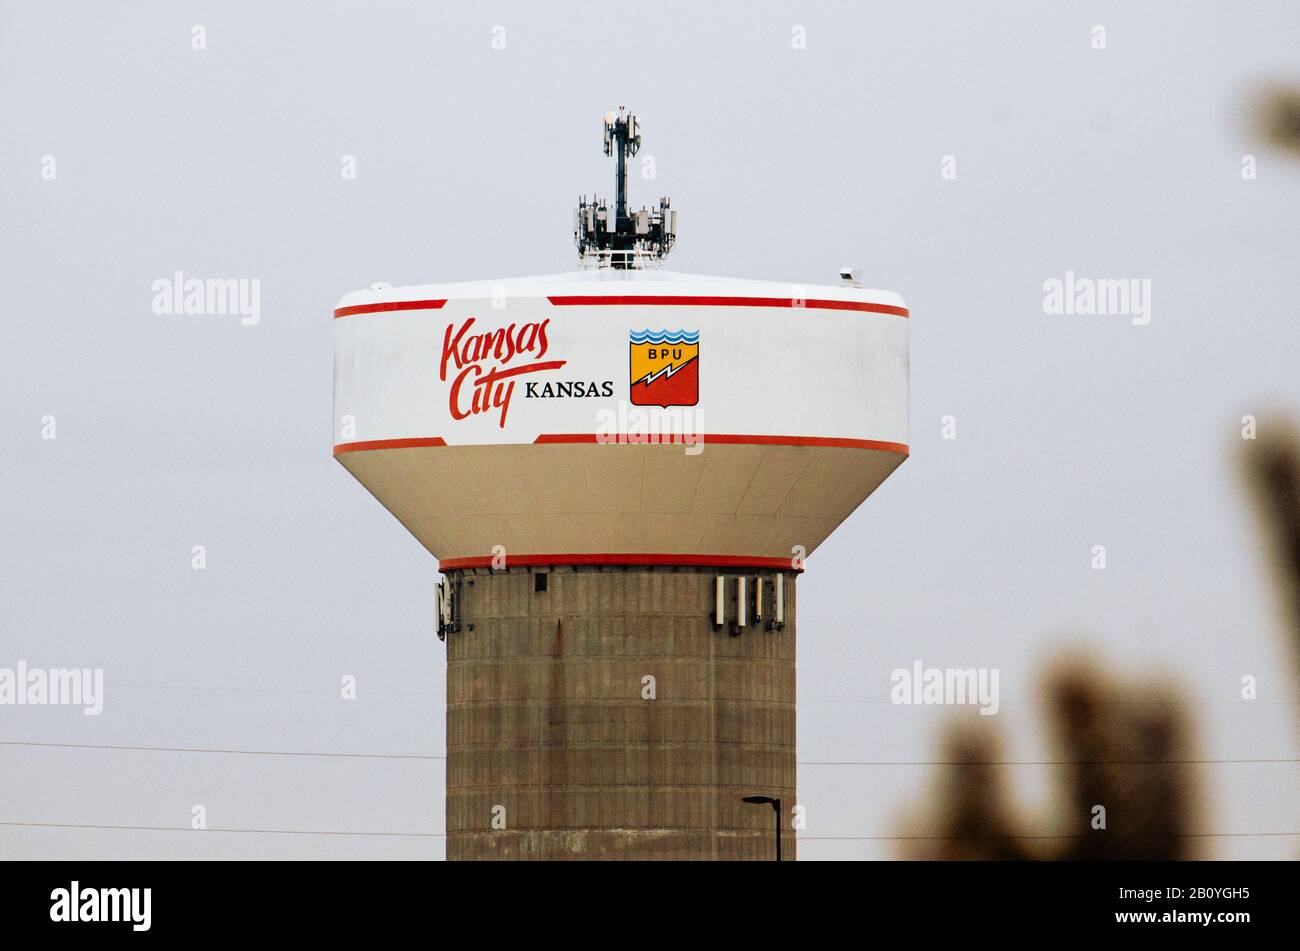 Kansas City, KS Water tower with BPU Board of Public Utilities logo Stock Photo